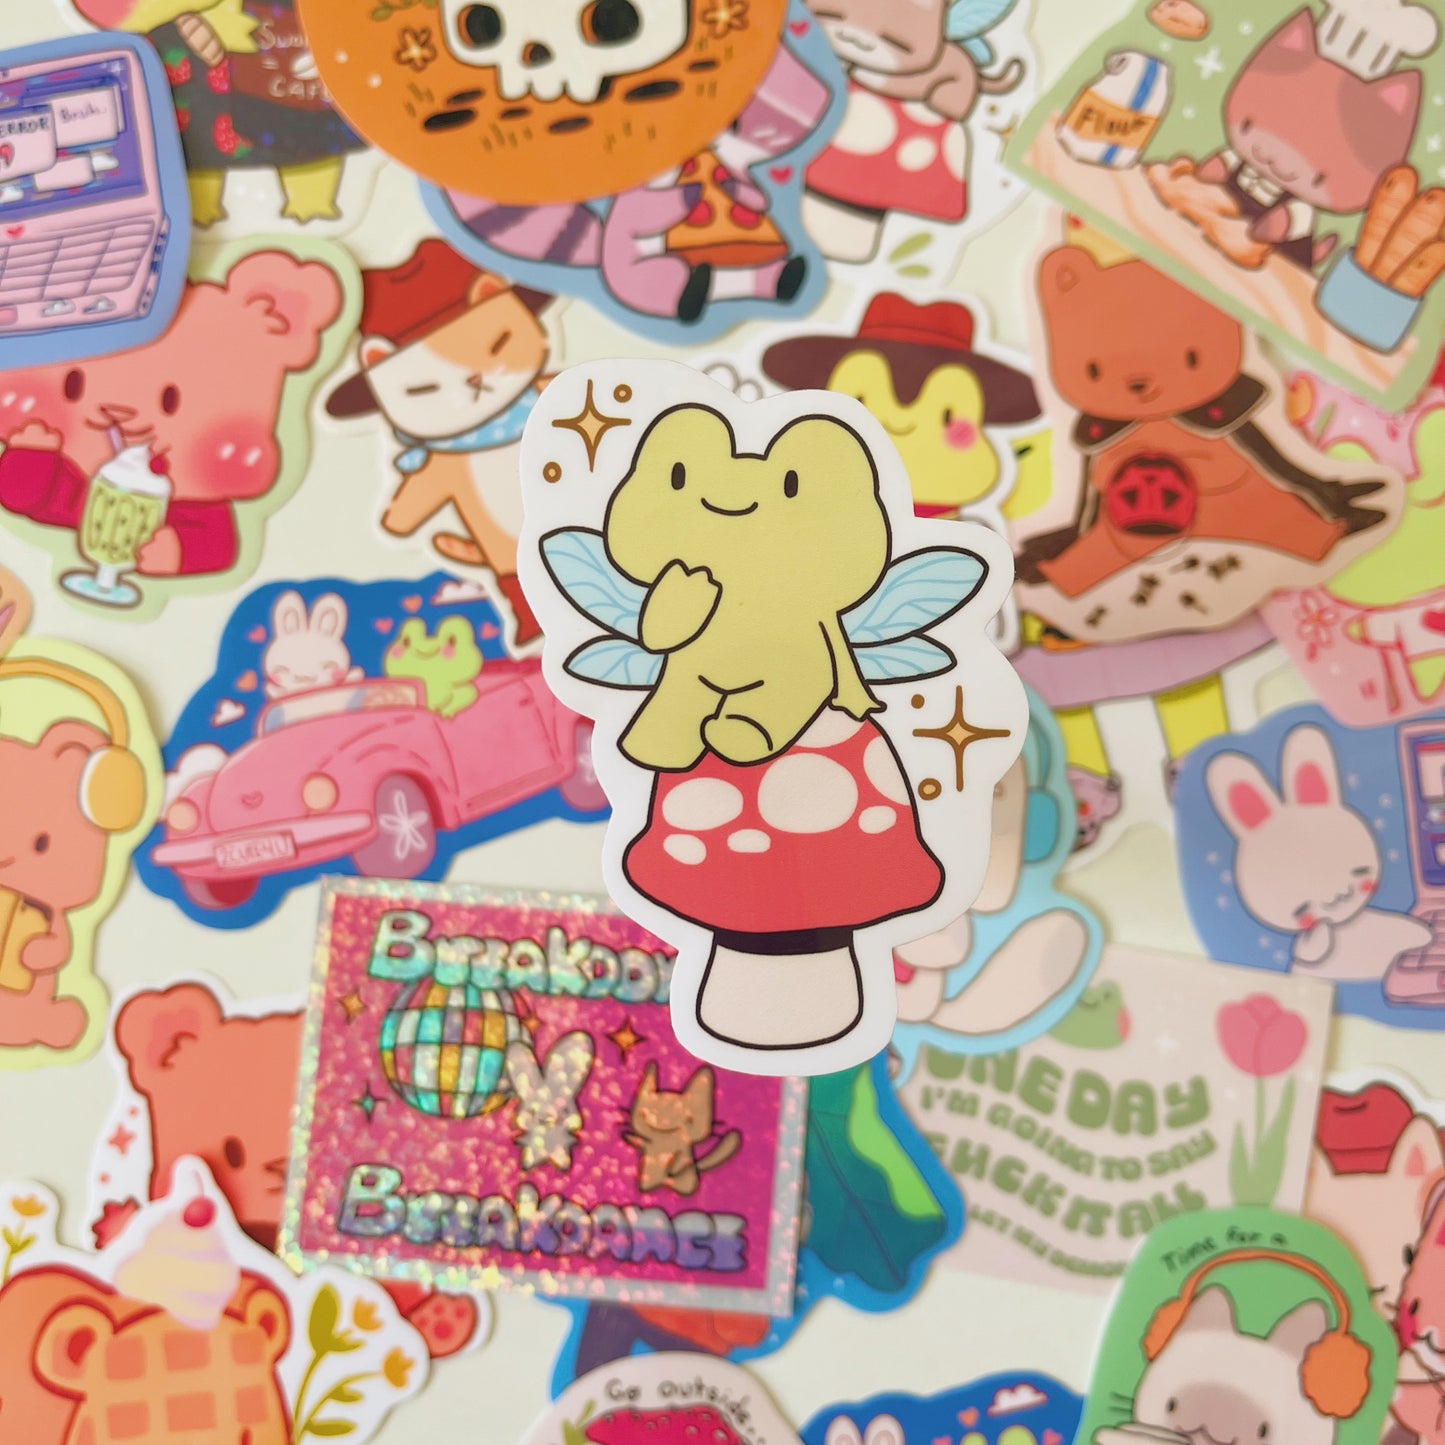 Mystery Sticker Bundle | FroginaSweater Sticker Grab Bag